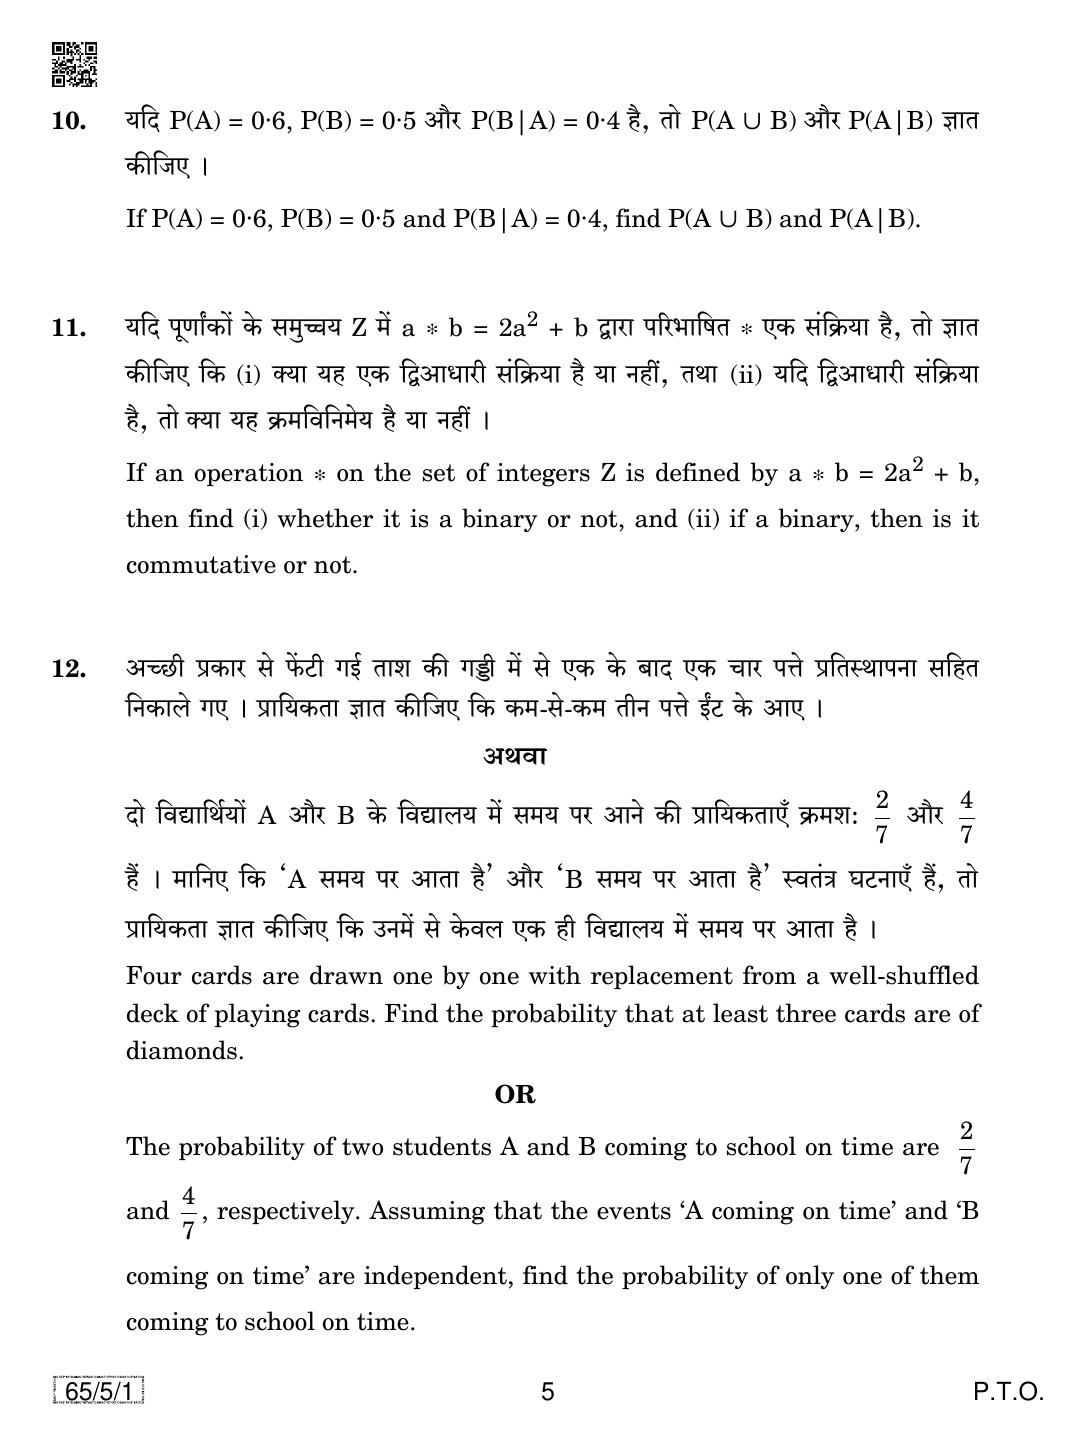 CBSE Class 12 65-5-1 Mathematics 2019 Question Paper - Page 5